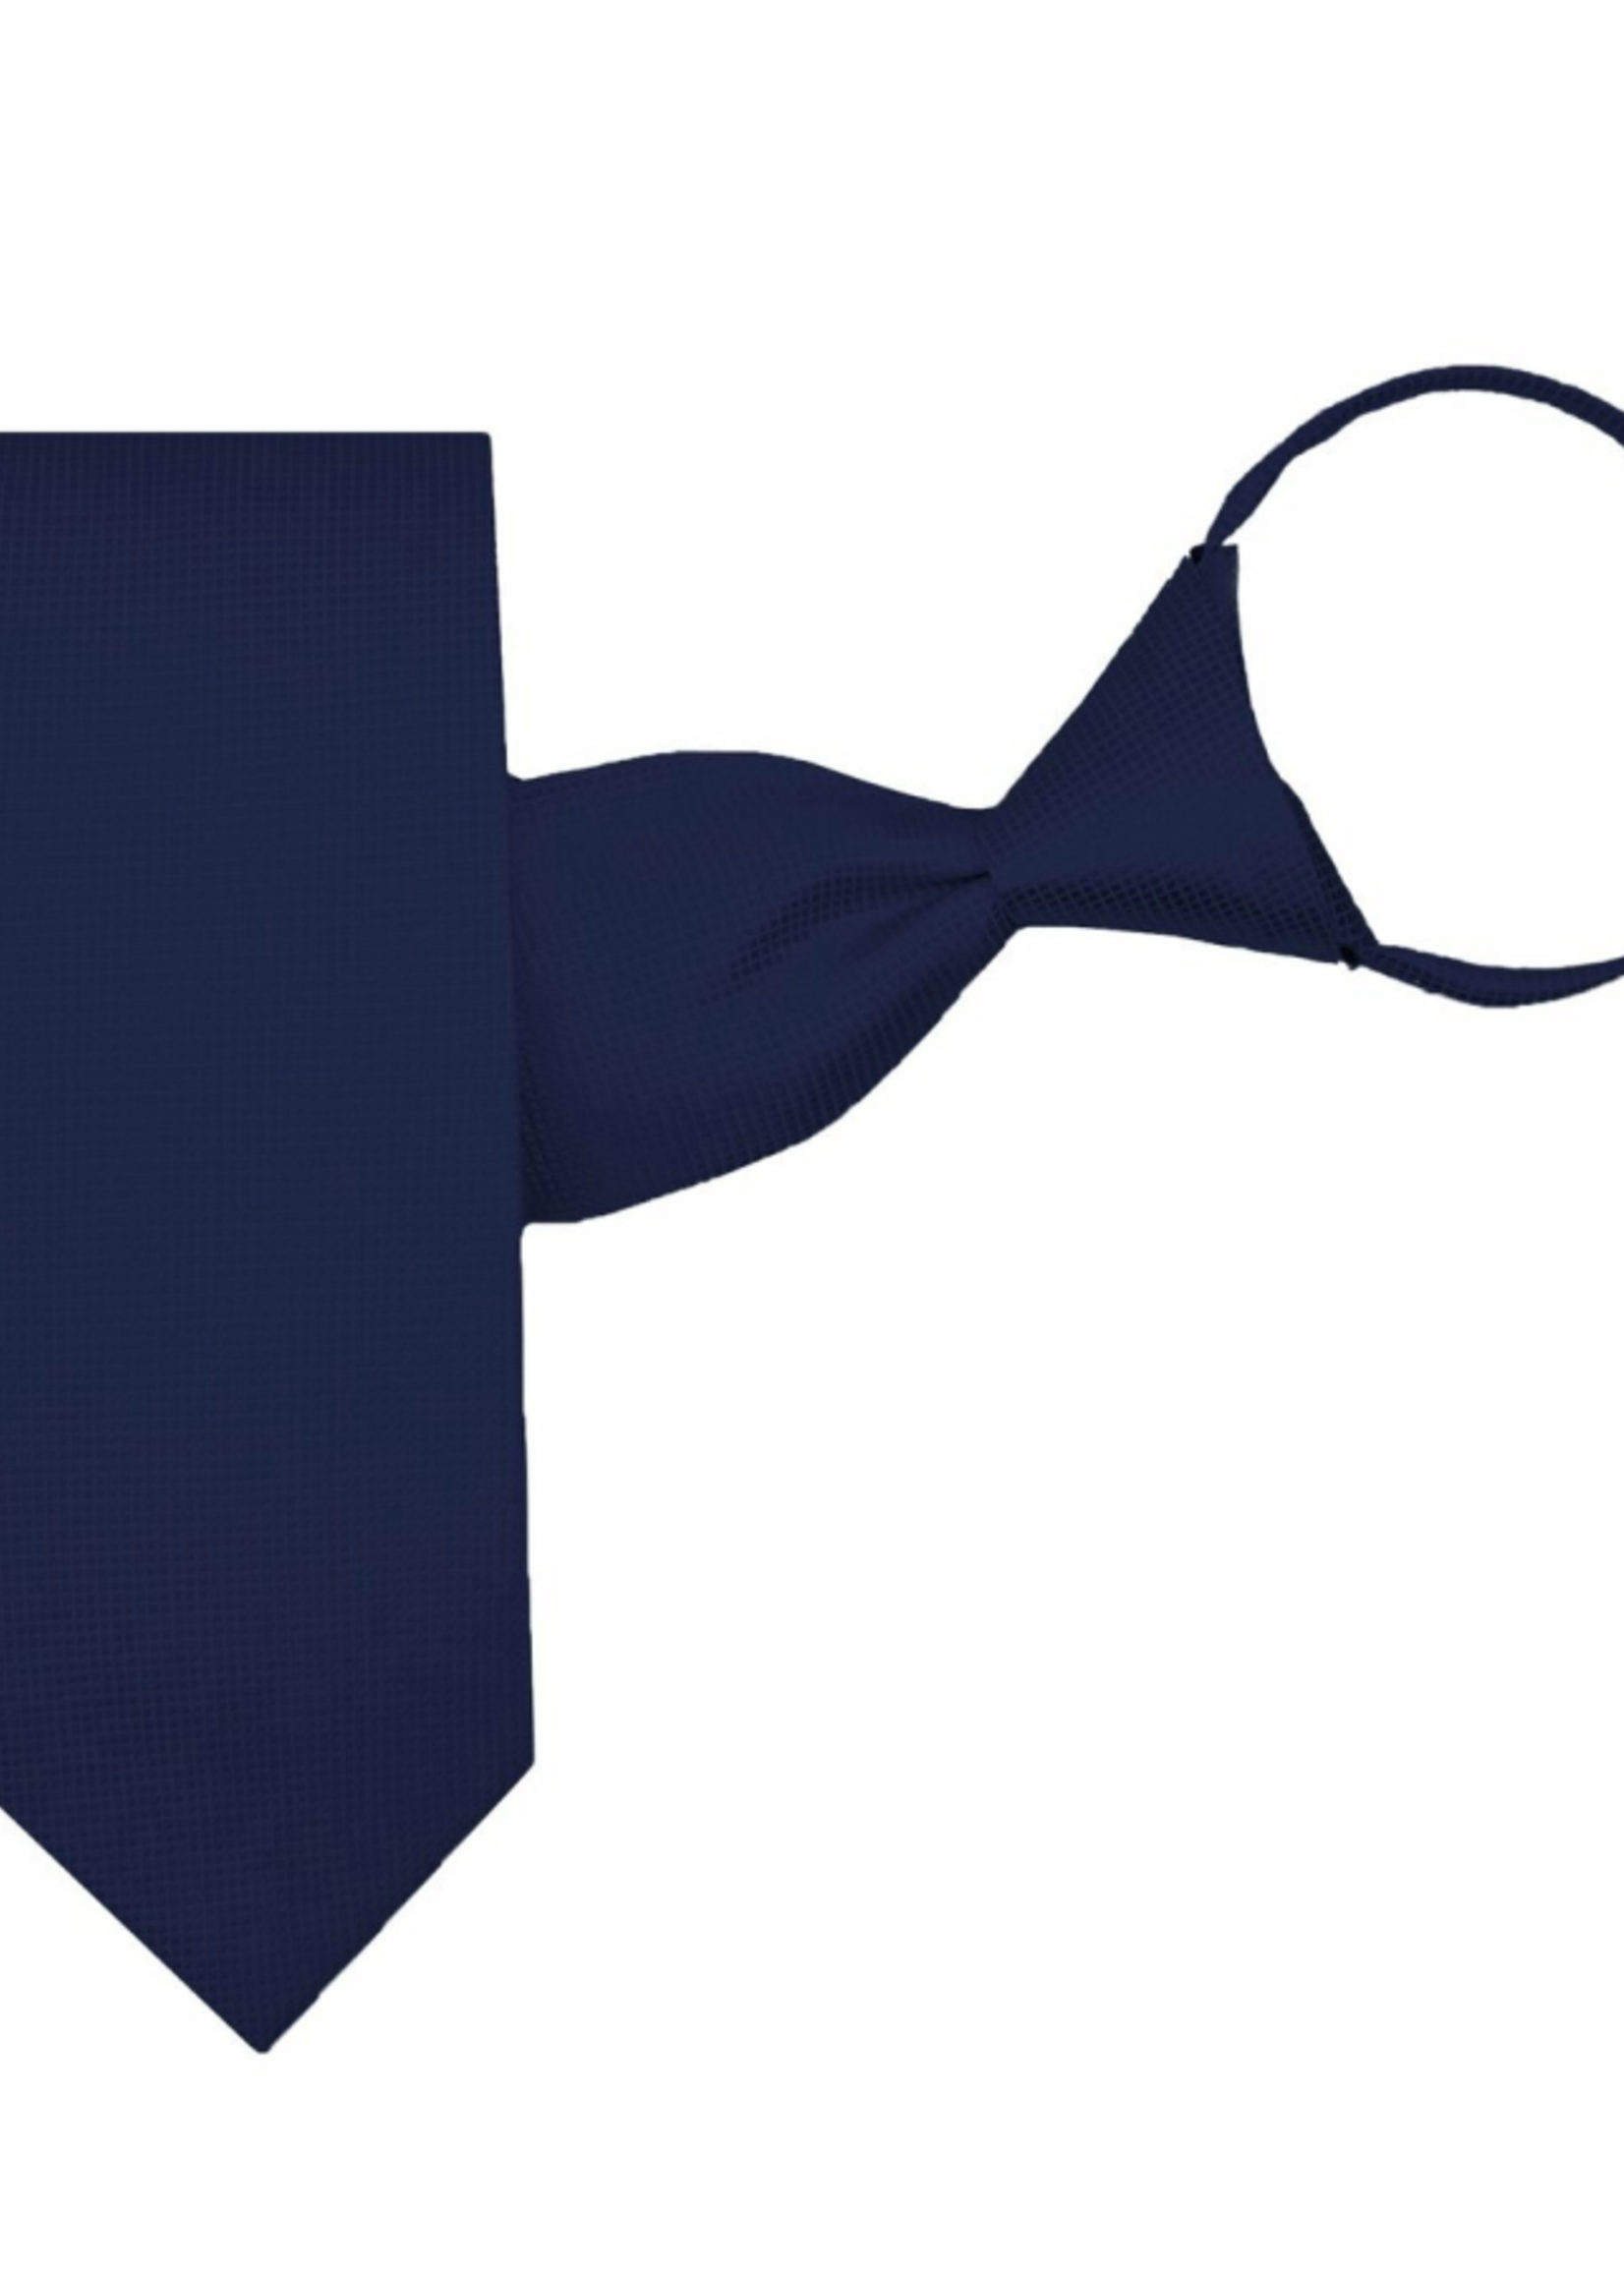 Navy Pretied Tie w/ zipper adjustment strap